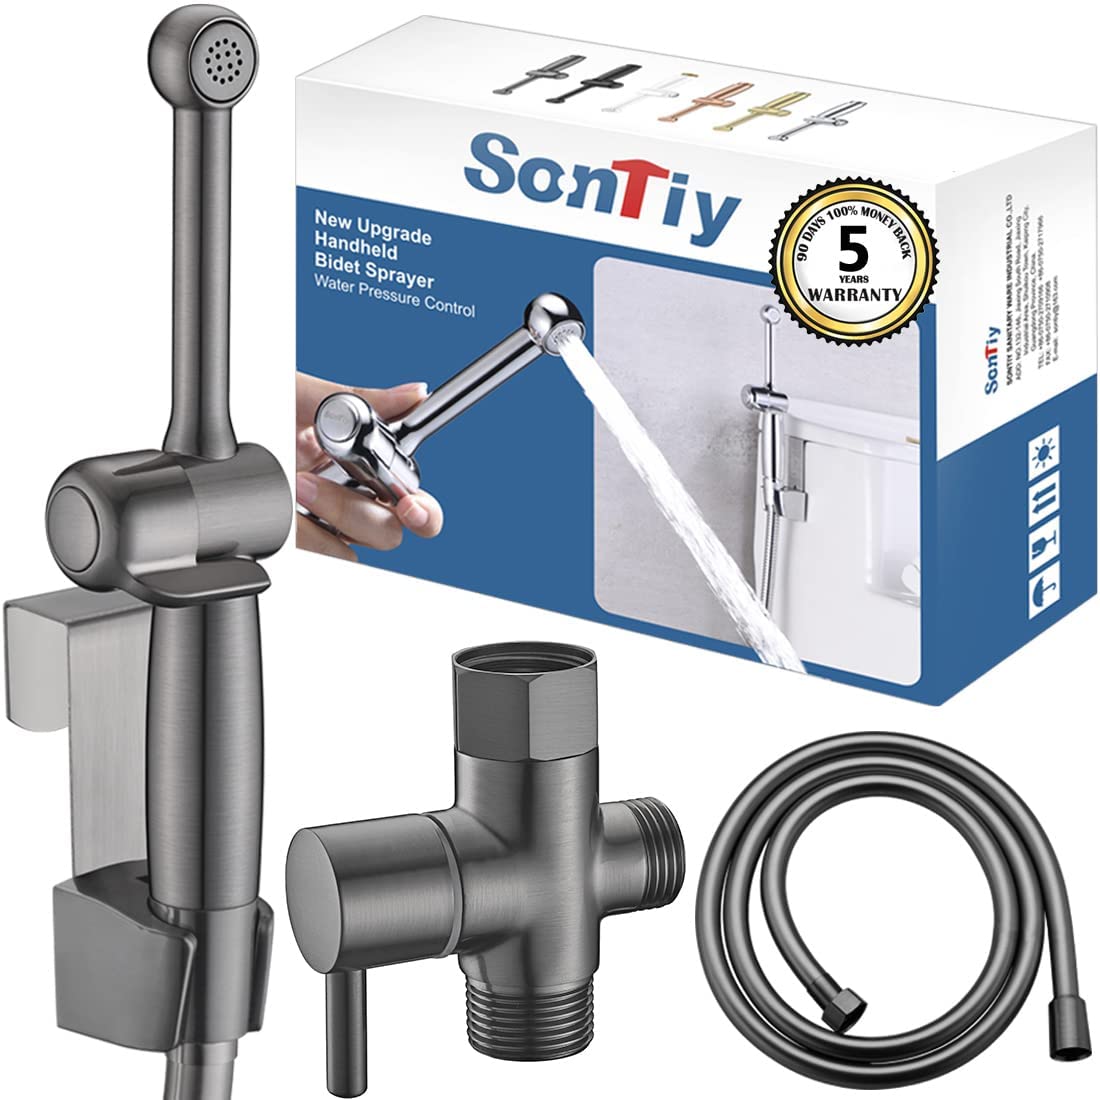 SonTiy Handheld Bidet Toilet Sprayer